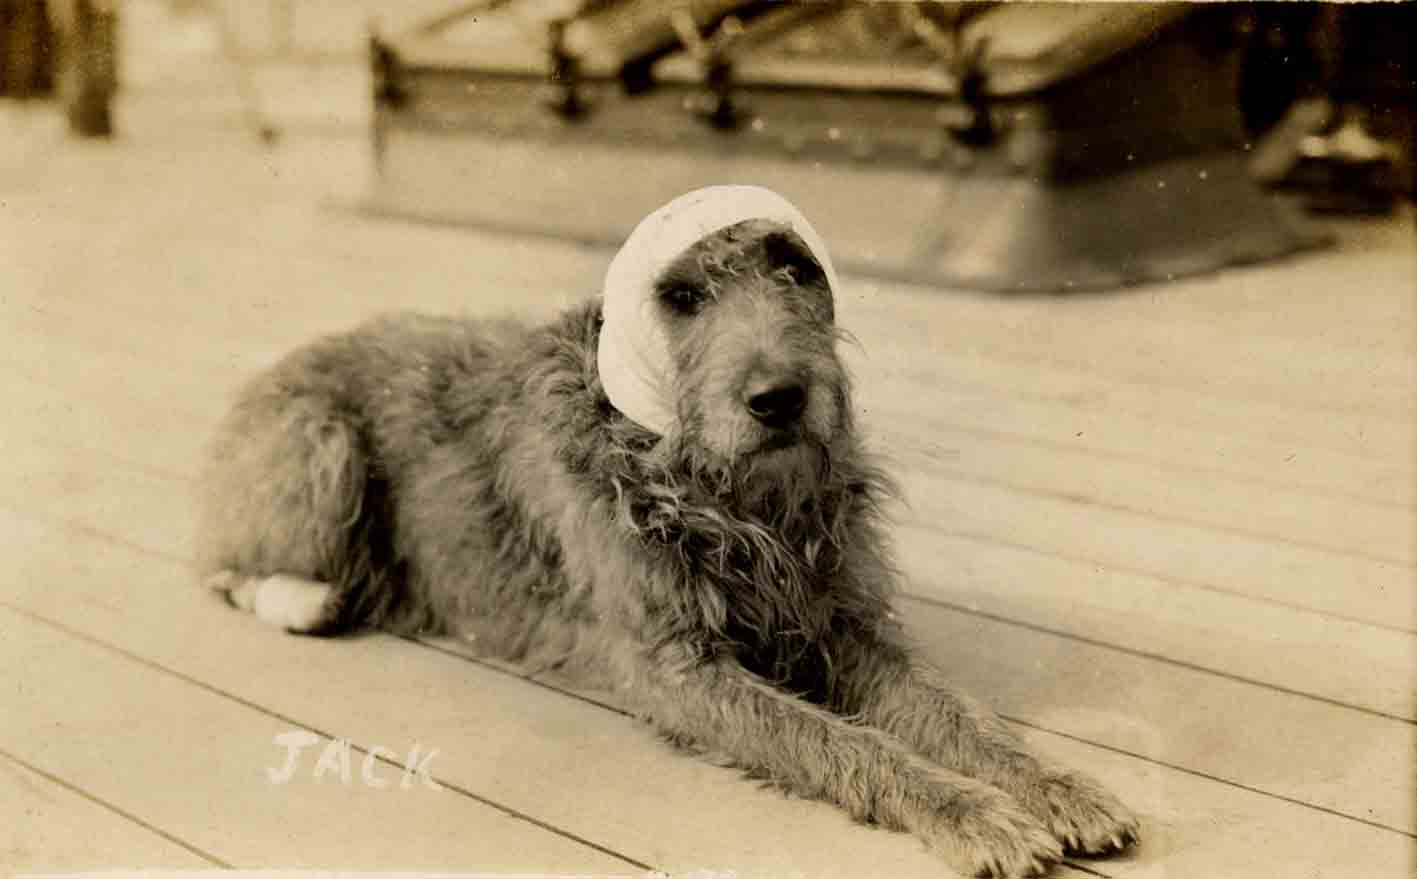 Vintage dog photos